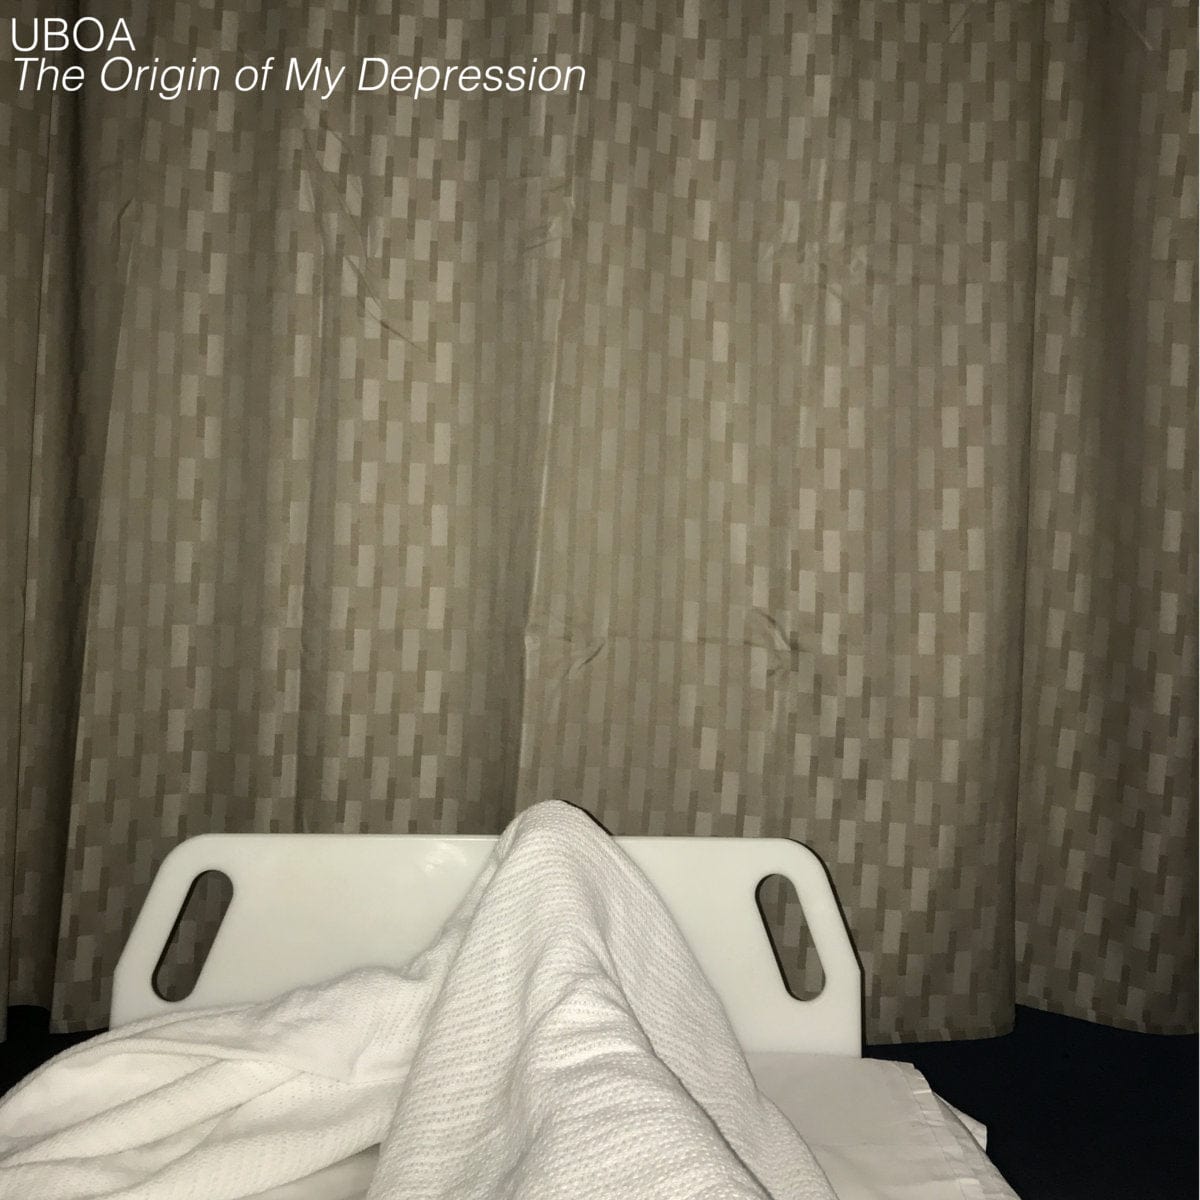 The Flenser Uboa "The Origin of My Depression" LP (pre-order)